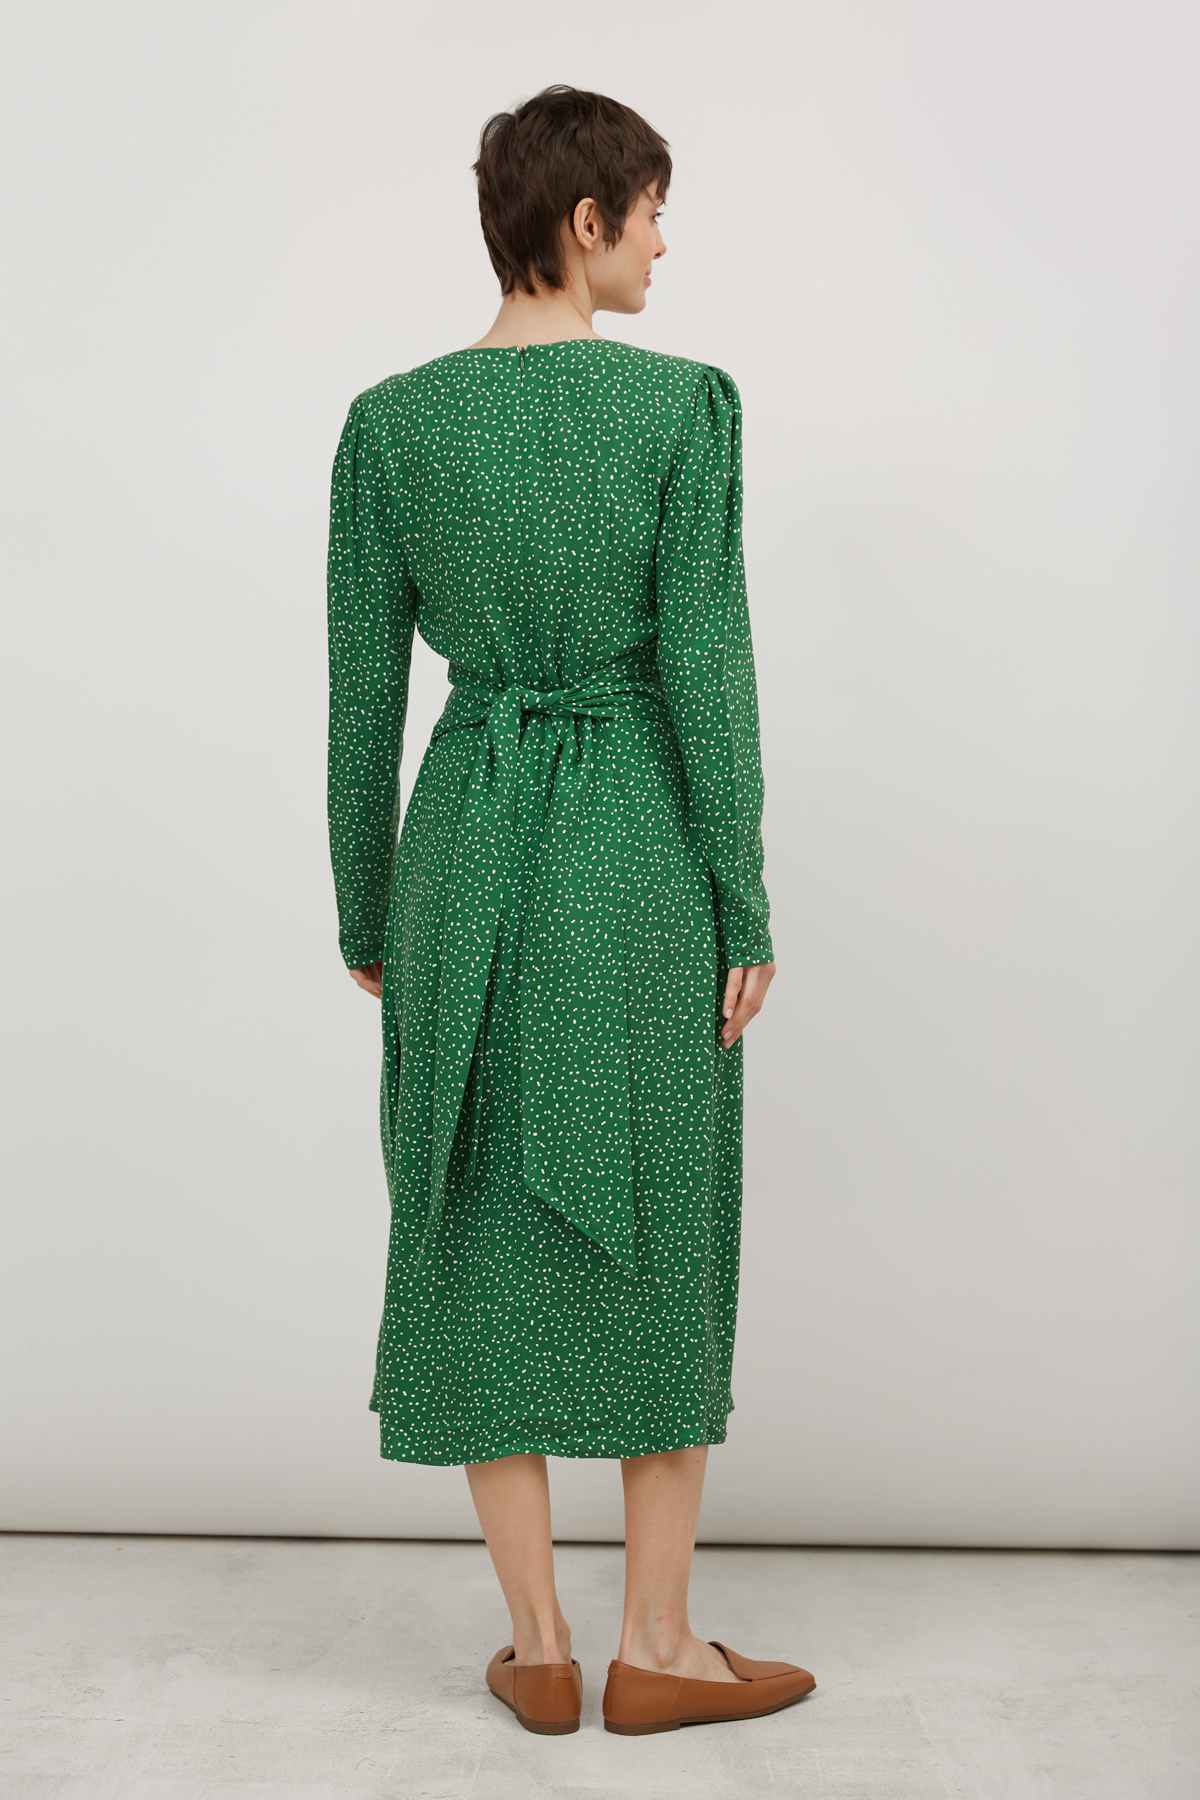 Green midi dress with viscose in white drops print, photo 5